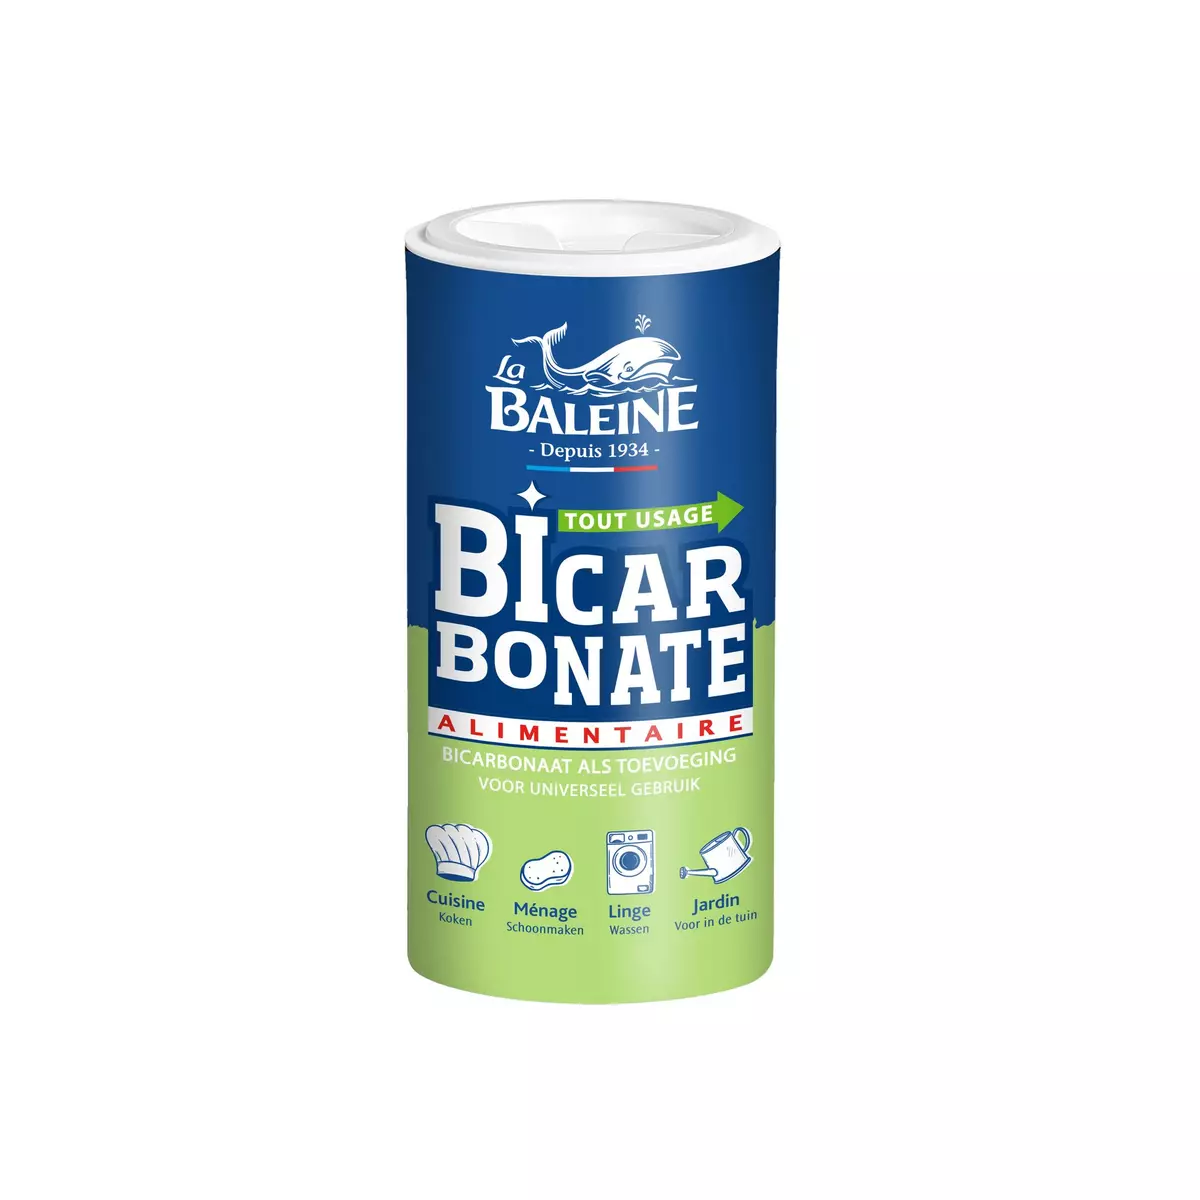 LA BALEINE Bicarbonate alimentaire usage universel 400g